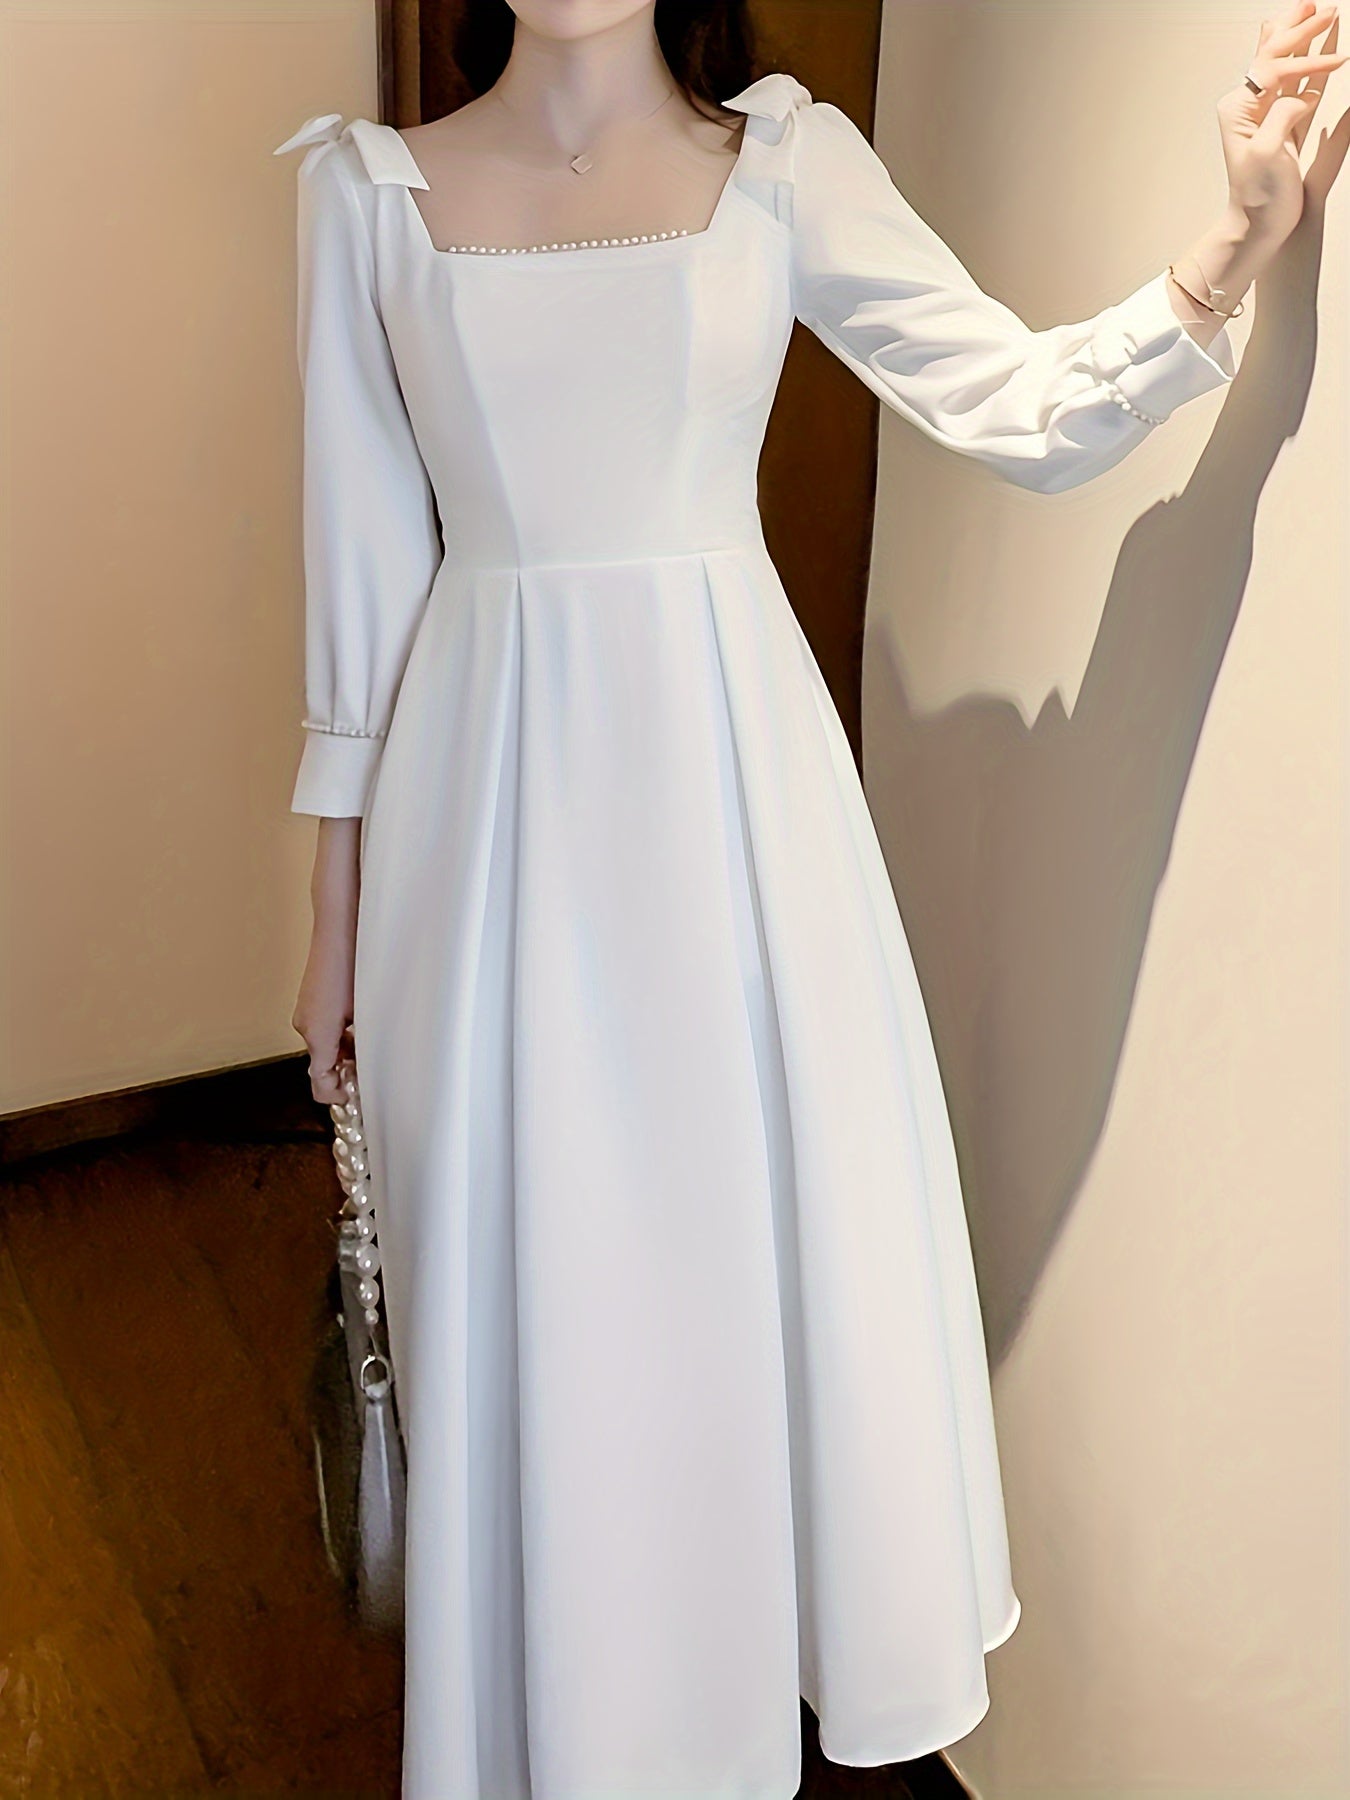 Vzyzv Beaded Square Neck Dress, Elegant Bow Decor Aline Dress For Wedding Party, Women's Clothing